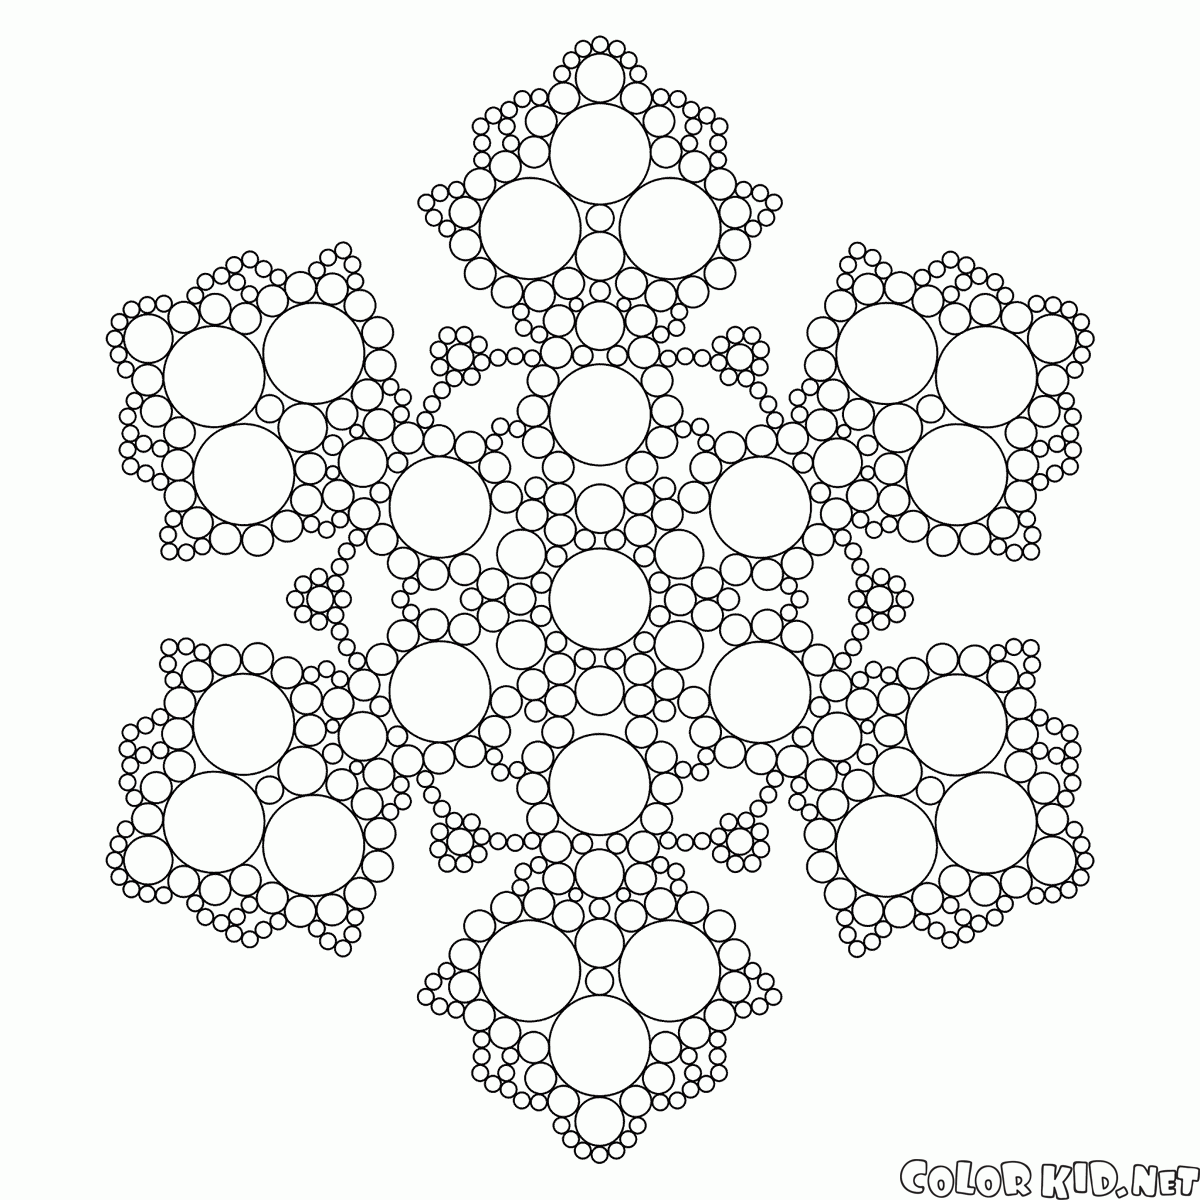 Coloring page - Fractal snowflake